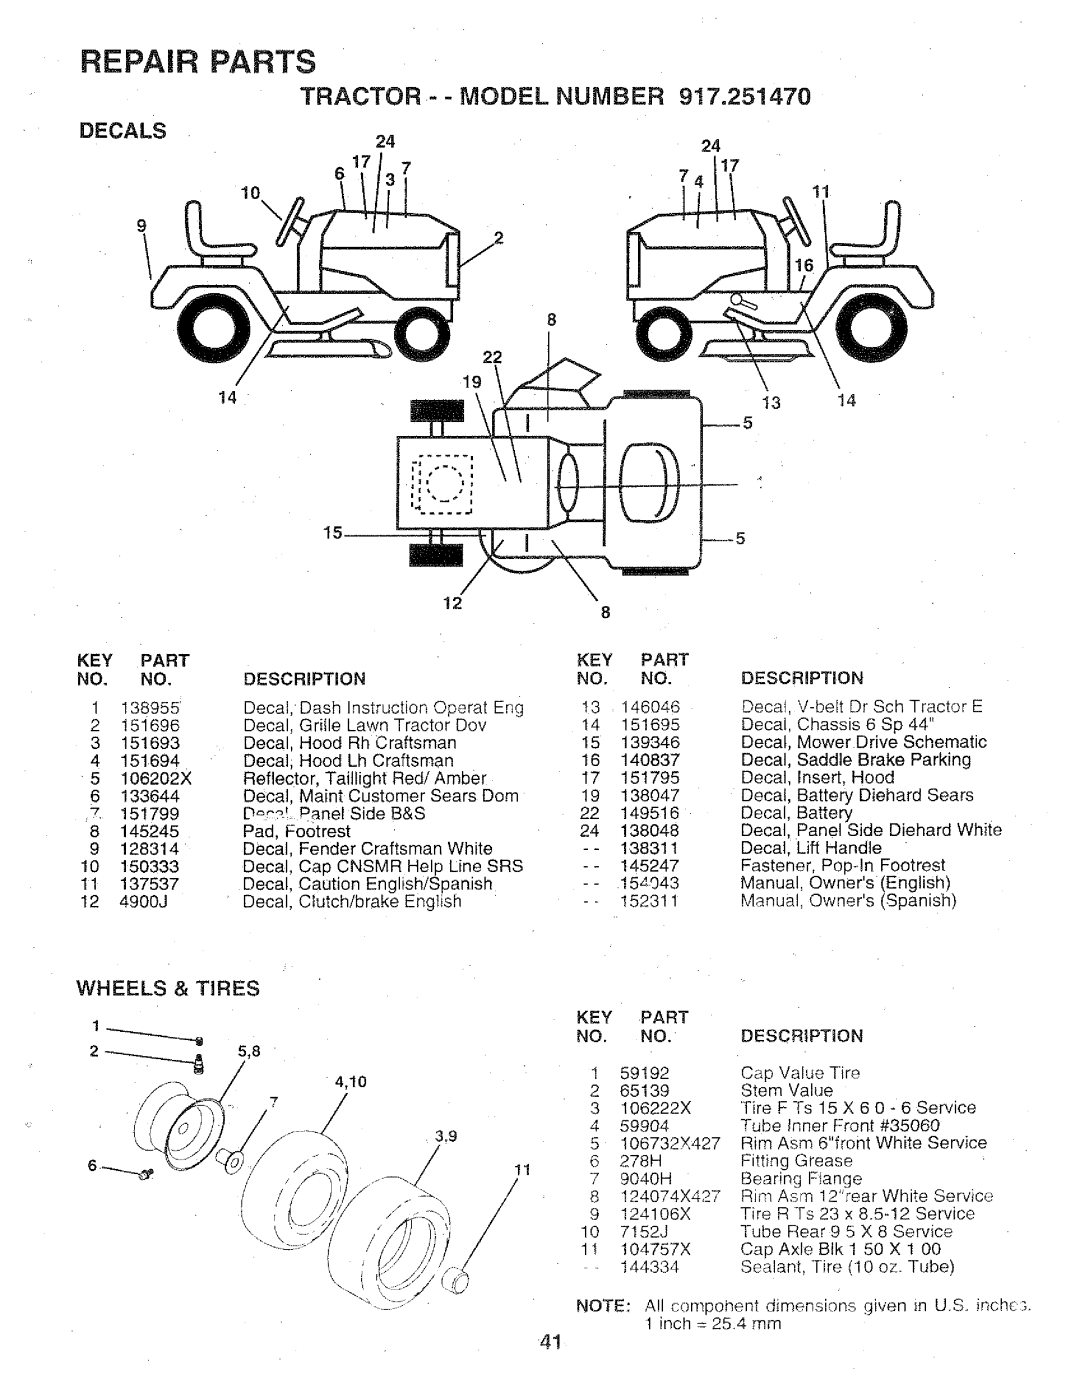 Sears 917.25147 owner manual Repair, Parts, Decals, Wheels & Tires, 2424, Tractor - - Model Number 